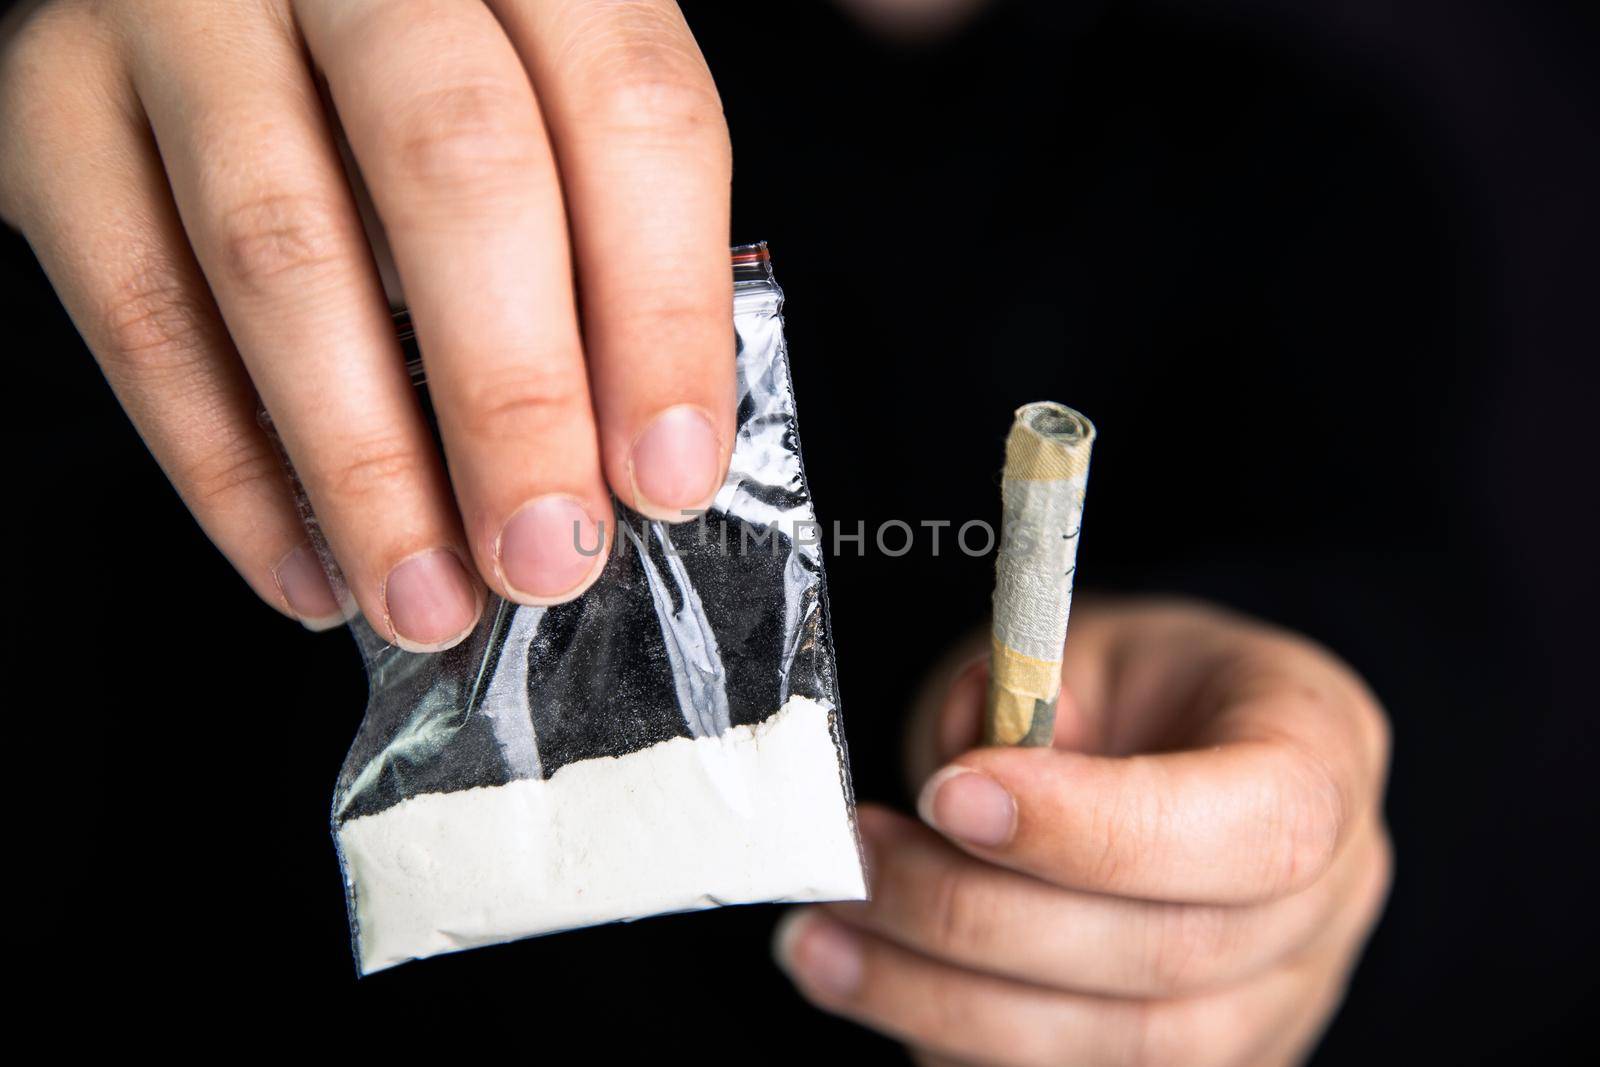 Drug dealer Giving drugs in a plastic bag, cocaine,heroin,speed or other drugs on dark black background, addiction,drugs,junky,criminal concept copy space